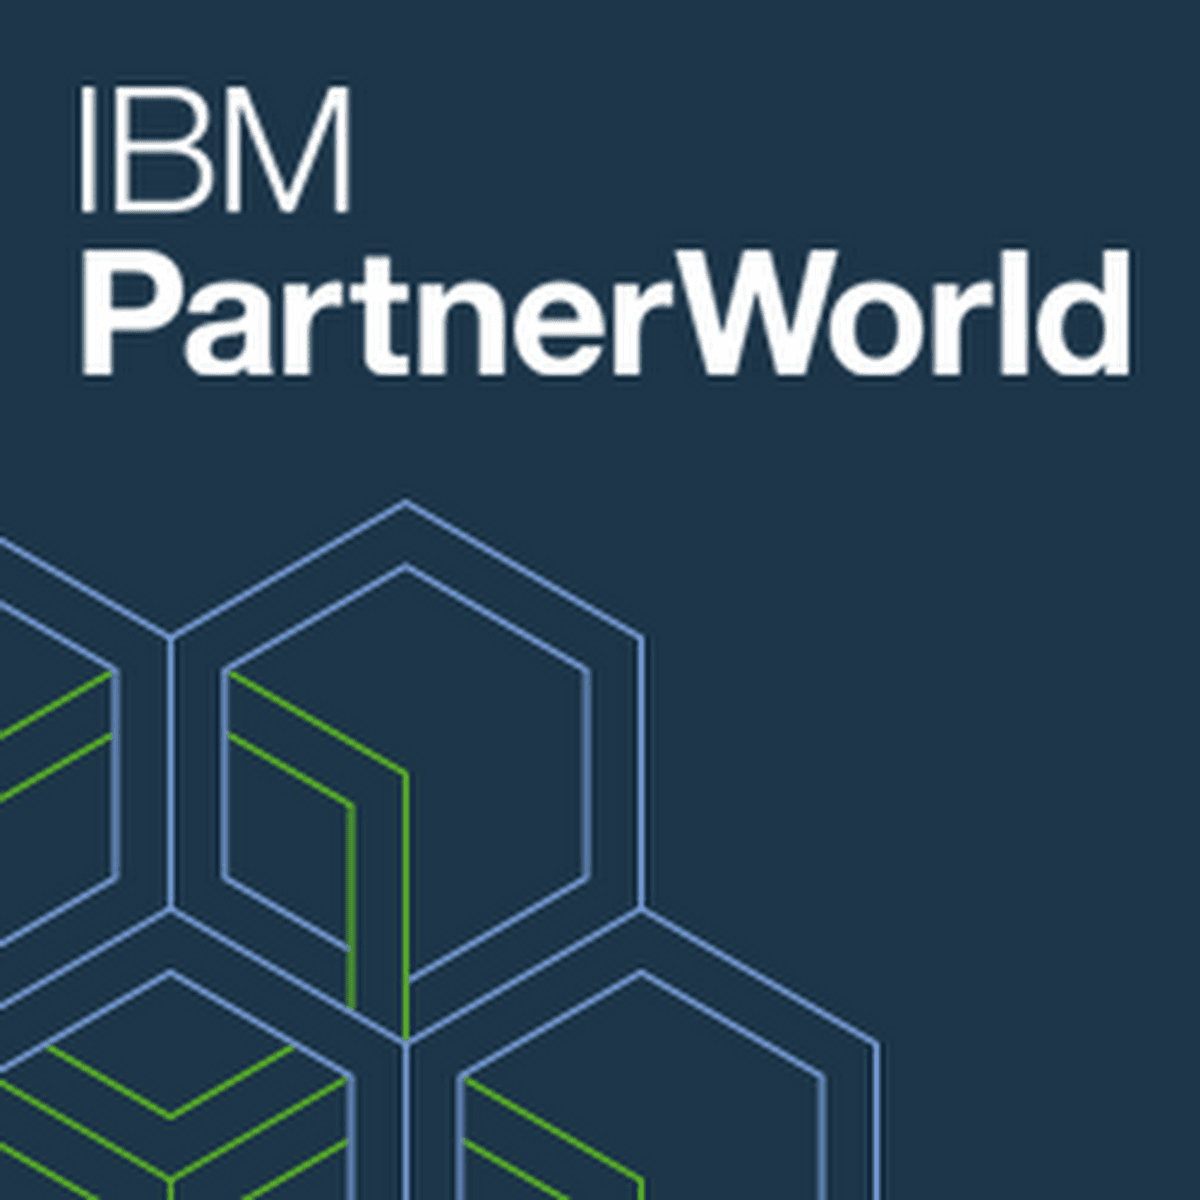 IBM PartnerWorld Leadership Conference 2017 image